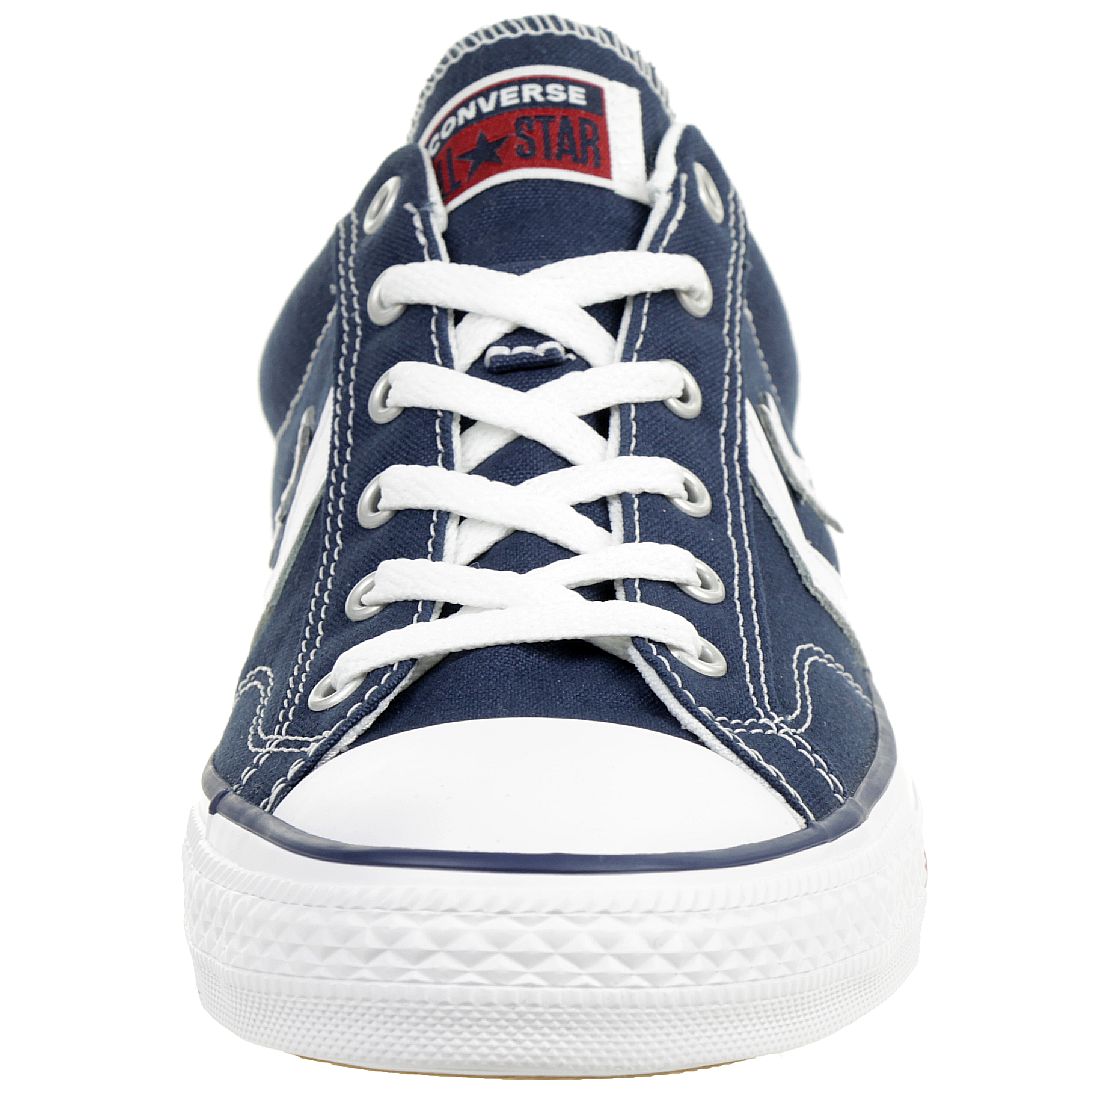 Converse STAR PLAYER OX Schuhe Sneaker Canvas Blau 144150C Gr. 36,5